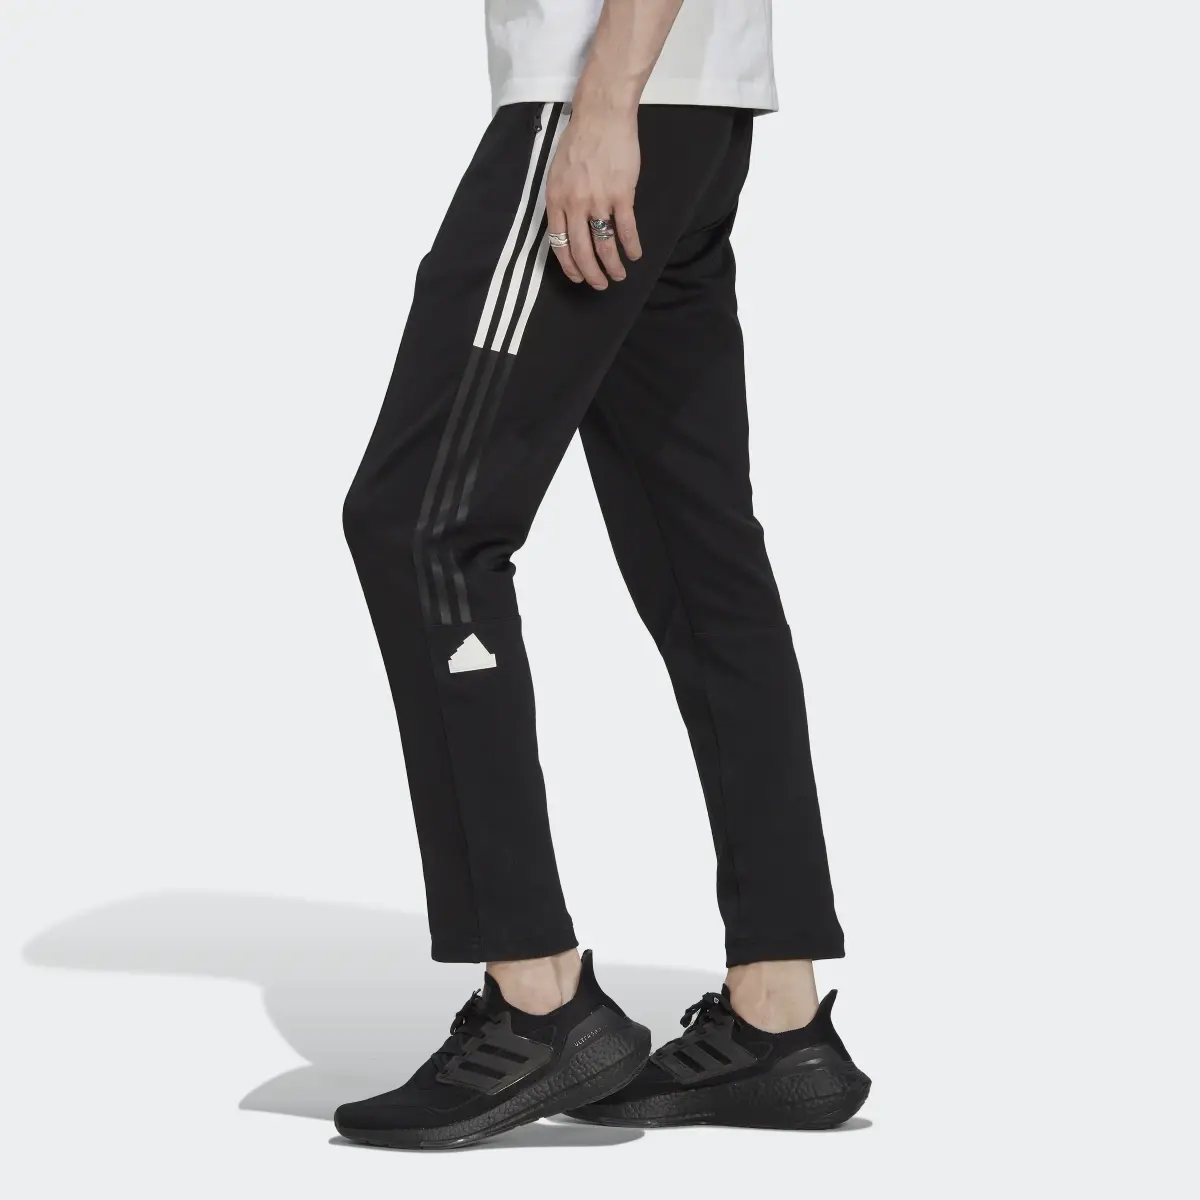 Adidas 3-Stripes Cuffed Pants. 2